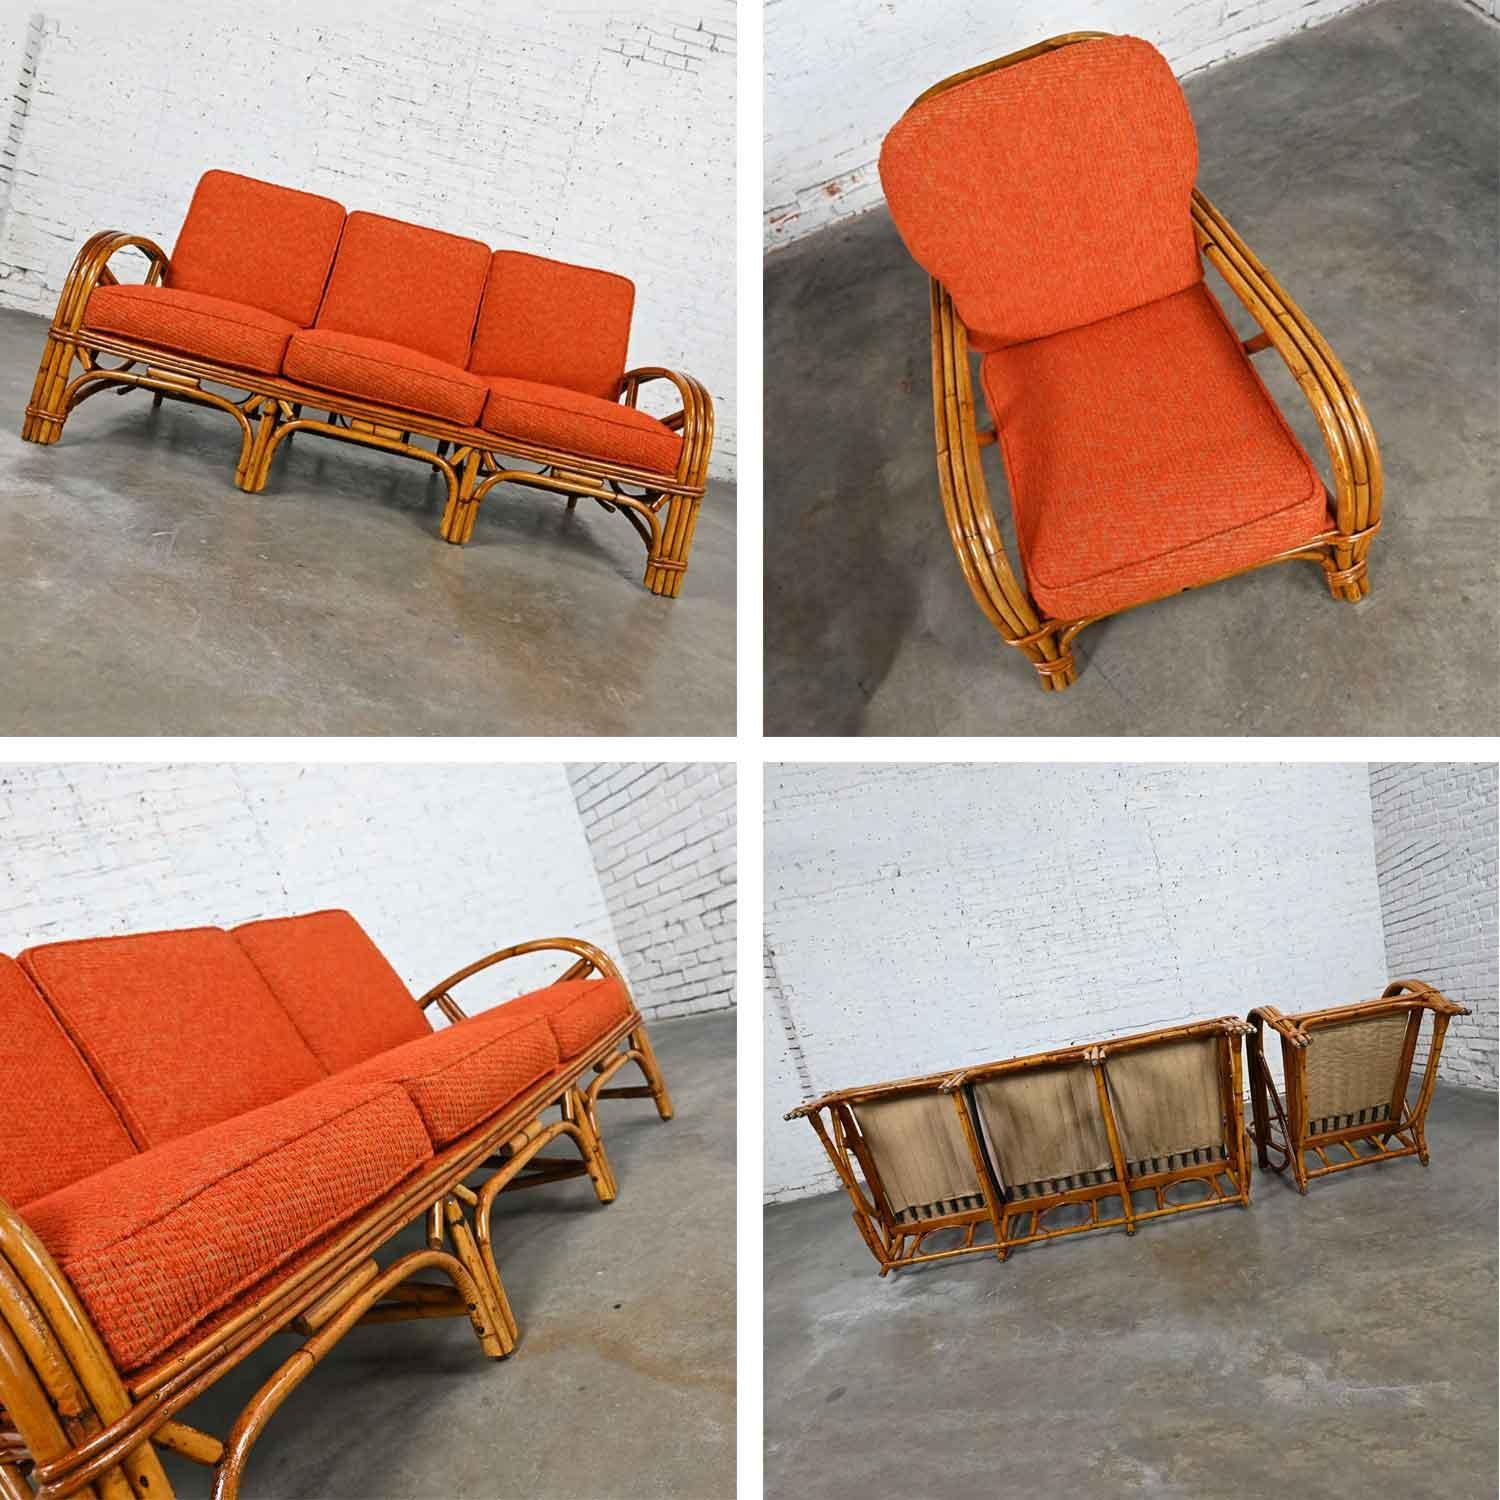 Triple Strand Rattan Sofa & Chair Orange Fabric Cushions Style Heywood Wakefield For Sale 8